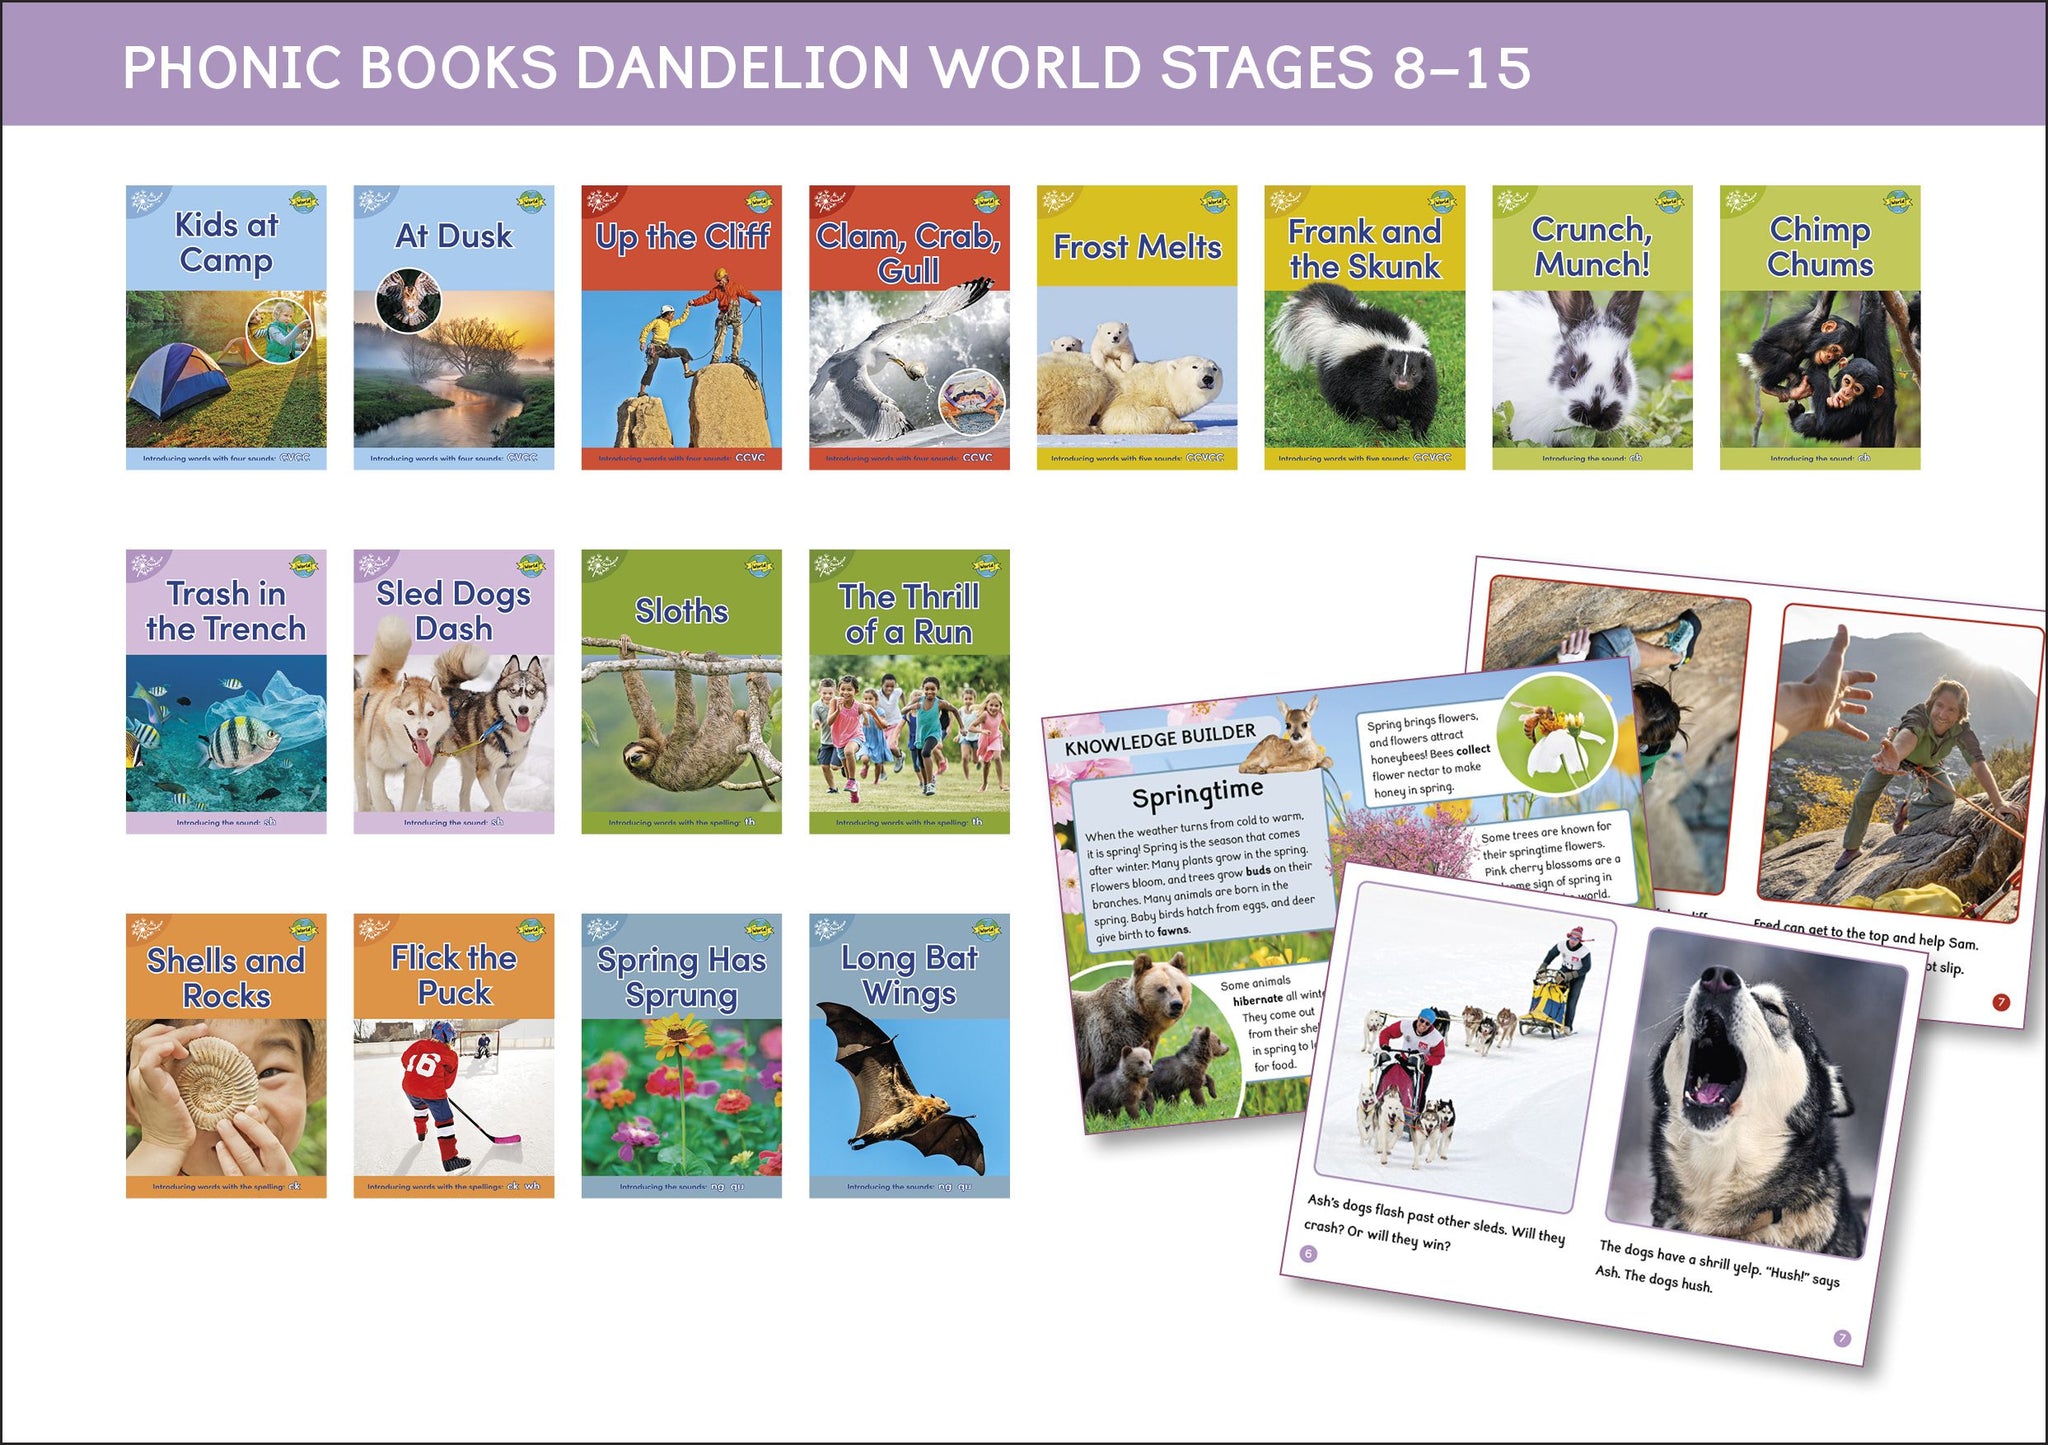 Dandelion World Stages 8-15